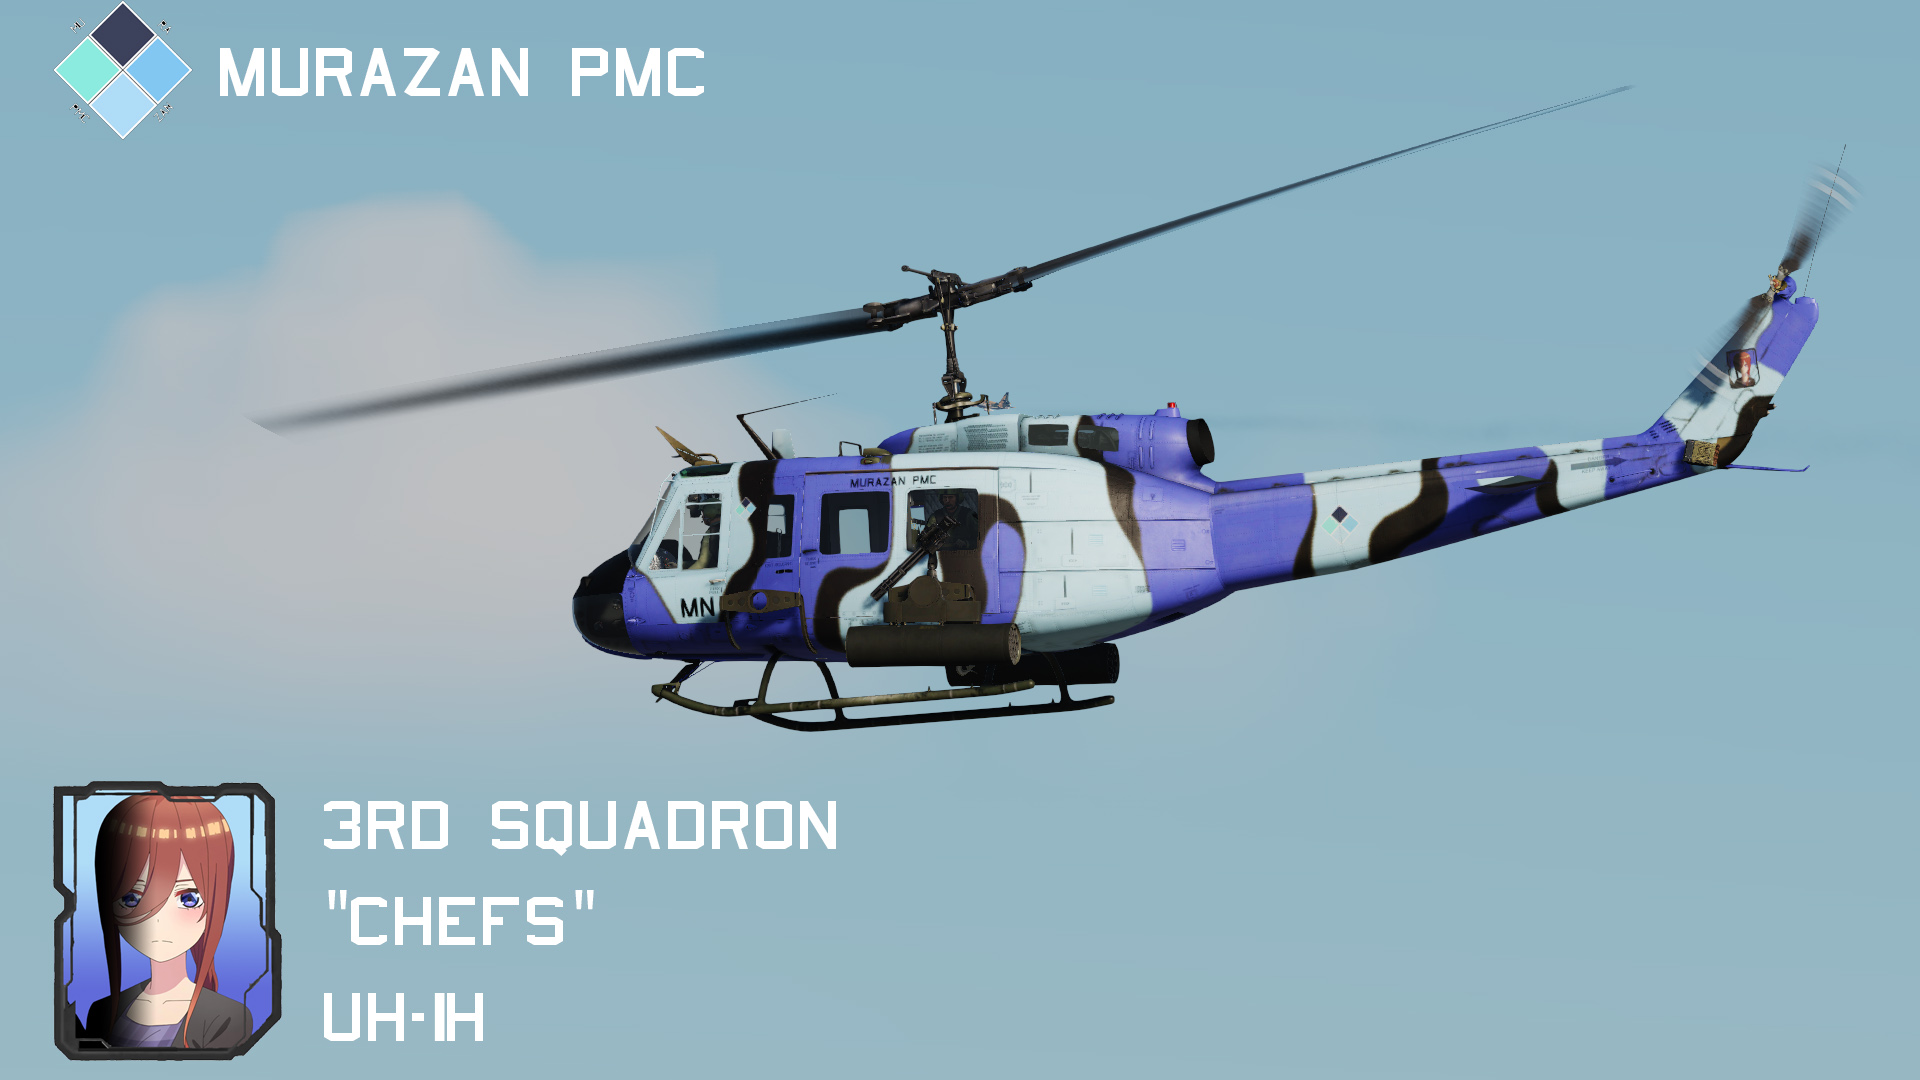 UH-1H Murazan PMC 3rd Squadron "Chefs" 